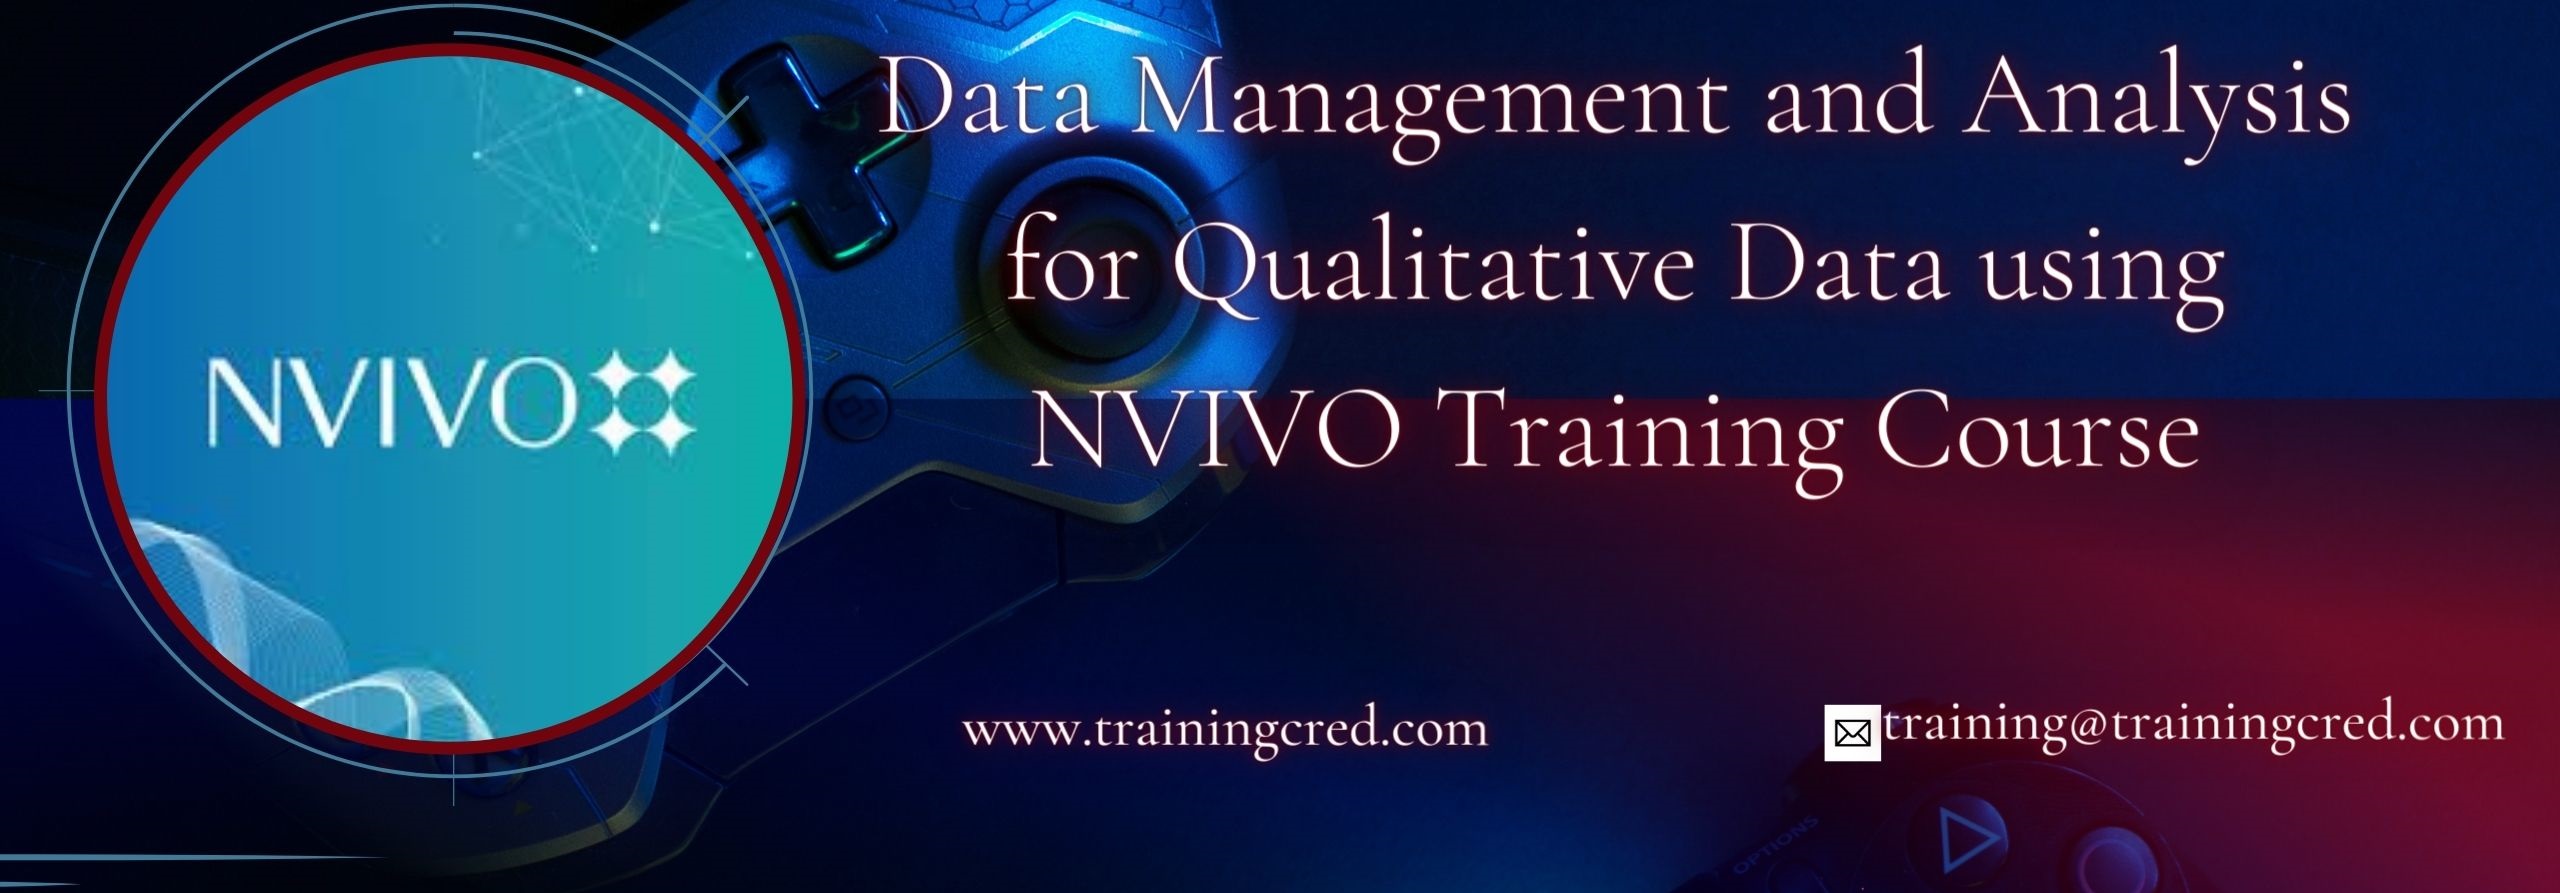 Qualitative Data Management and Analysis using NVIVO Training